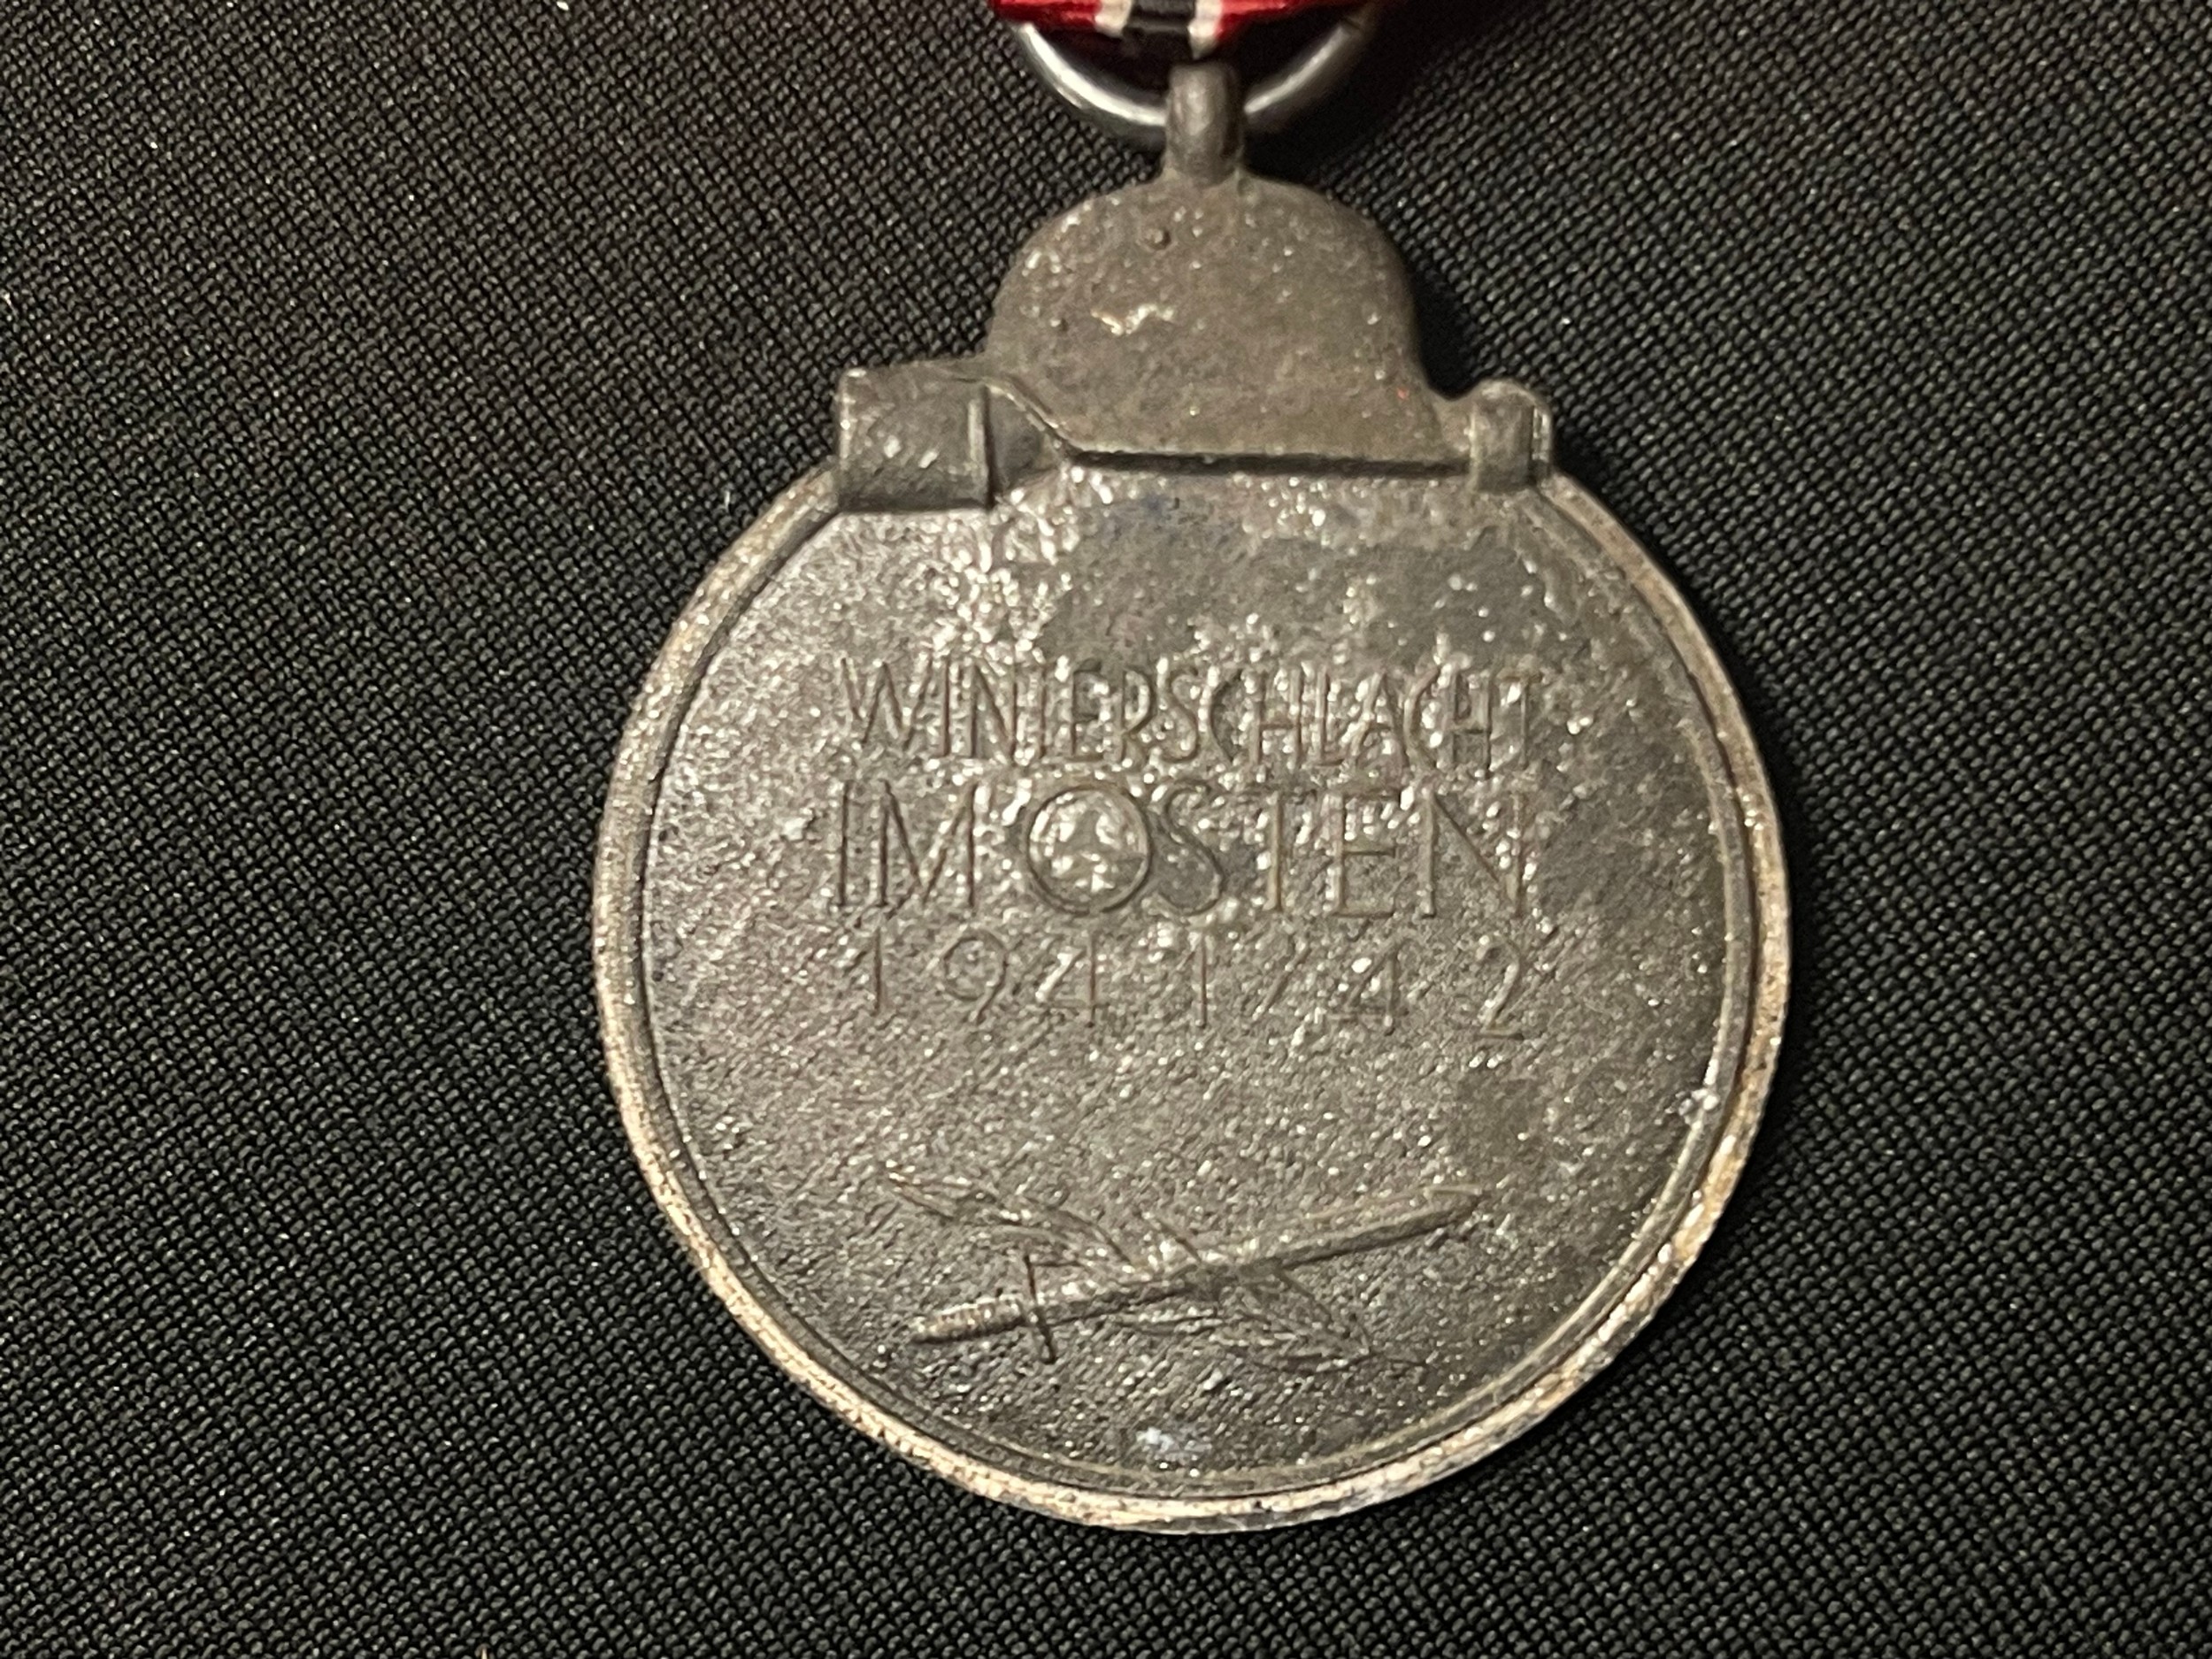 WW2 Third Reich Medaille "Winterschlacht im Osten 1941/42" (Ostmedaille) - Russian Front Medal. - Image 2 of 4